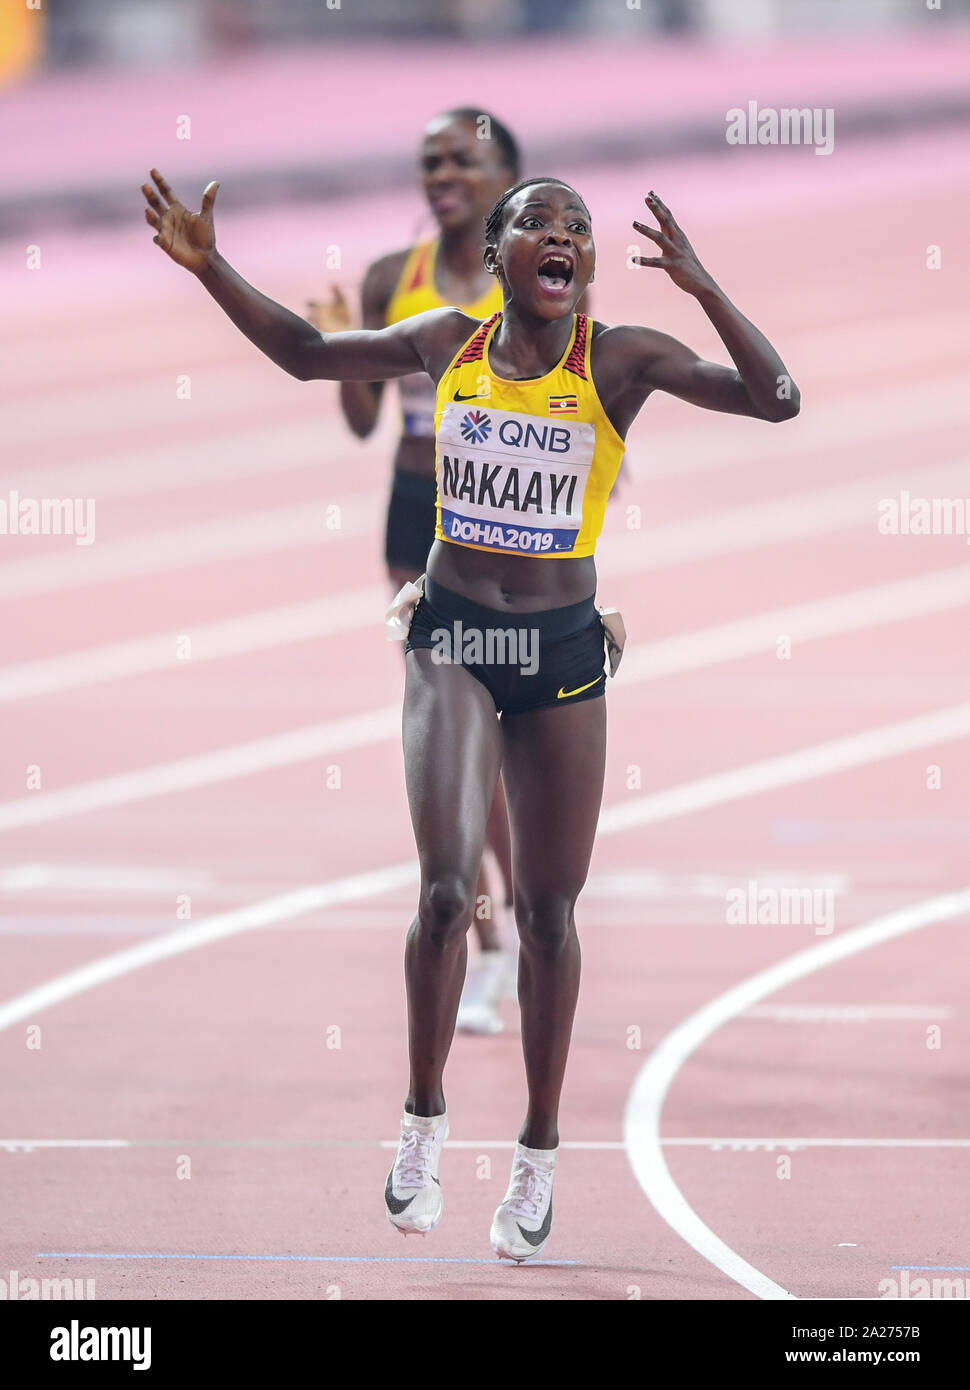 Halimah Nakaayi (Uganda). 800 m Goldmedaille. IAAF Leichtathletik WM, Doha 2019 Stockfoto